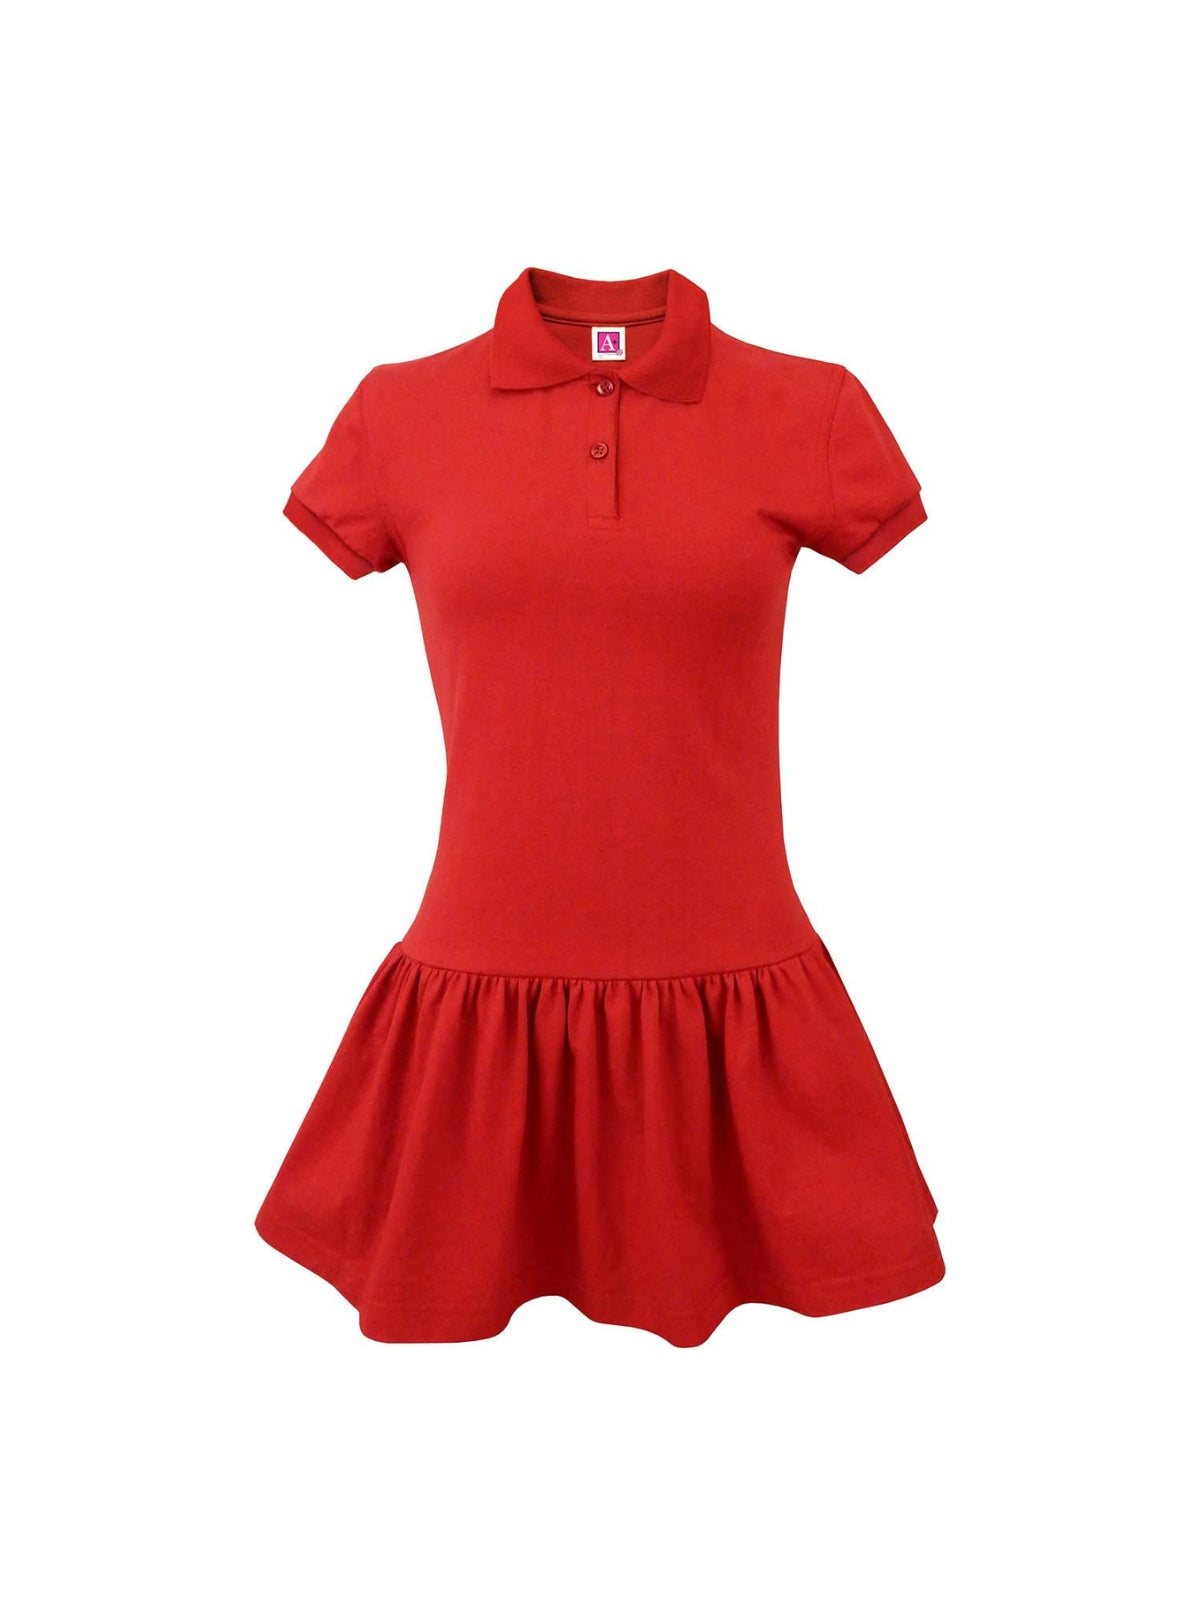 Girls' Jersey Knit Dress - 9729 - Red